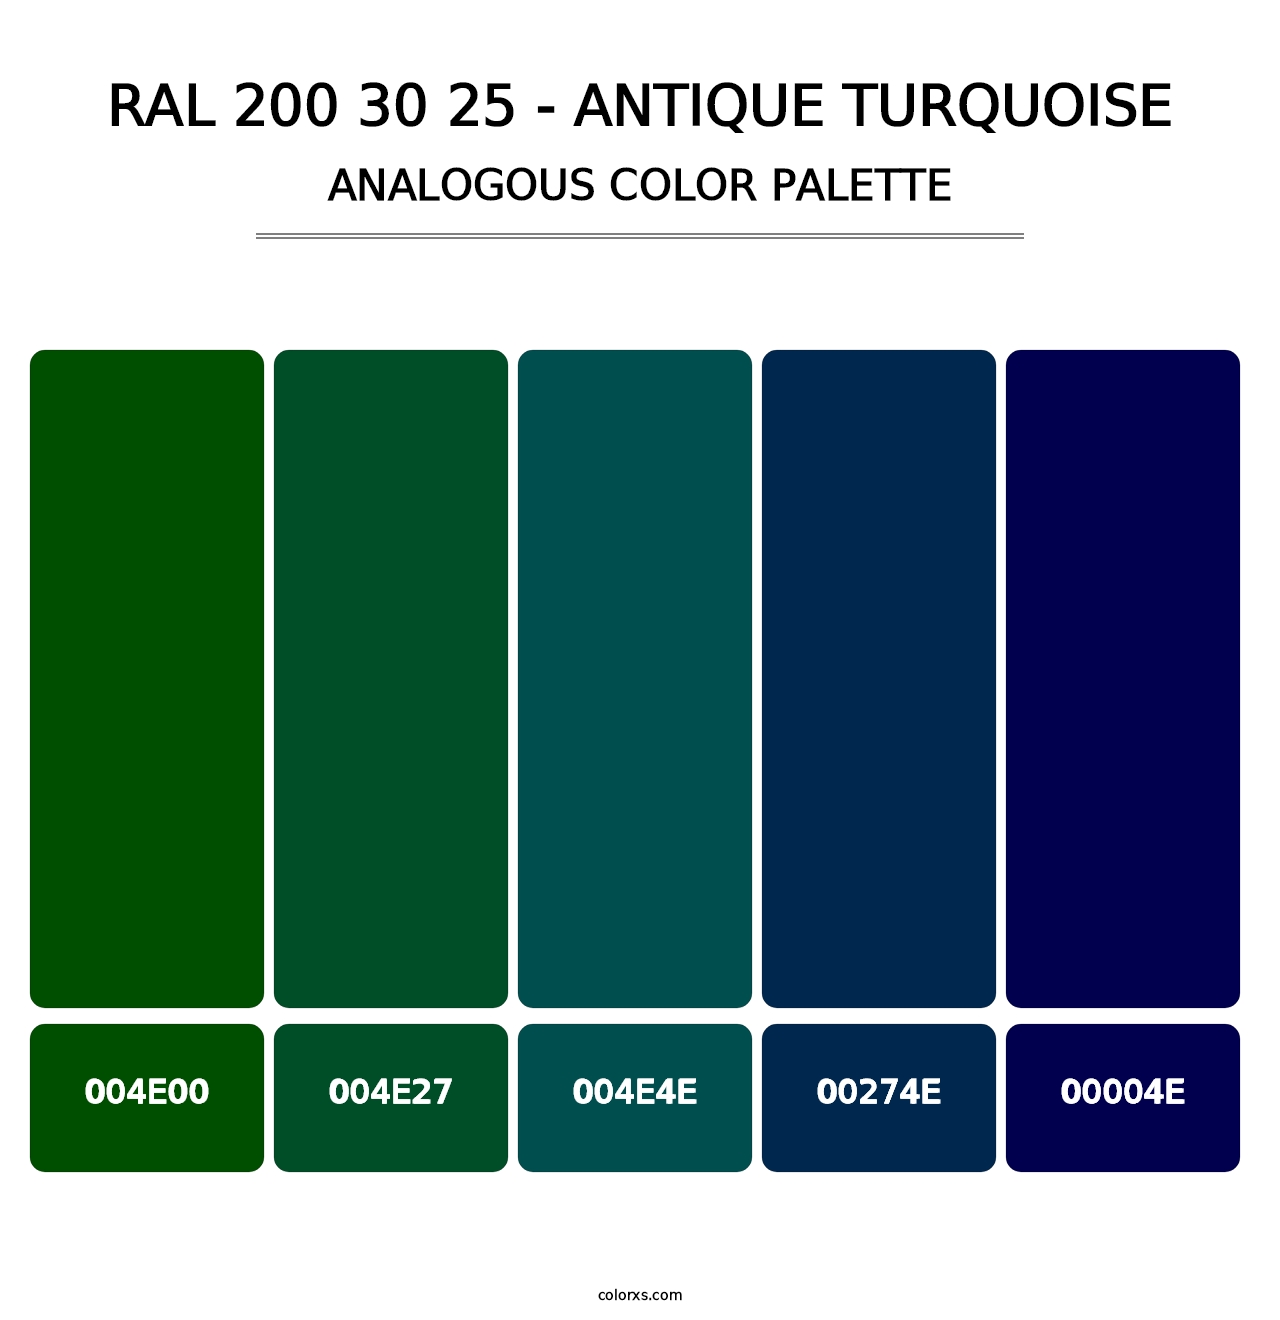 RAL 200 30 25 - Antique Turquoise - Analogous Color Palette